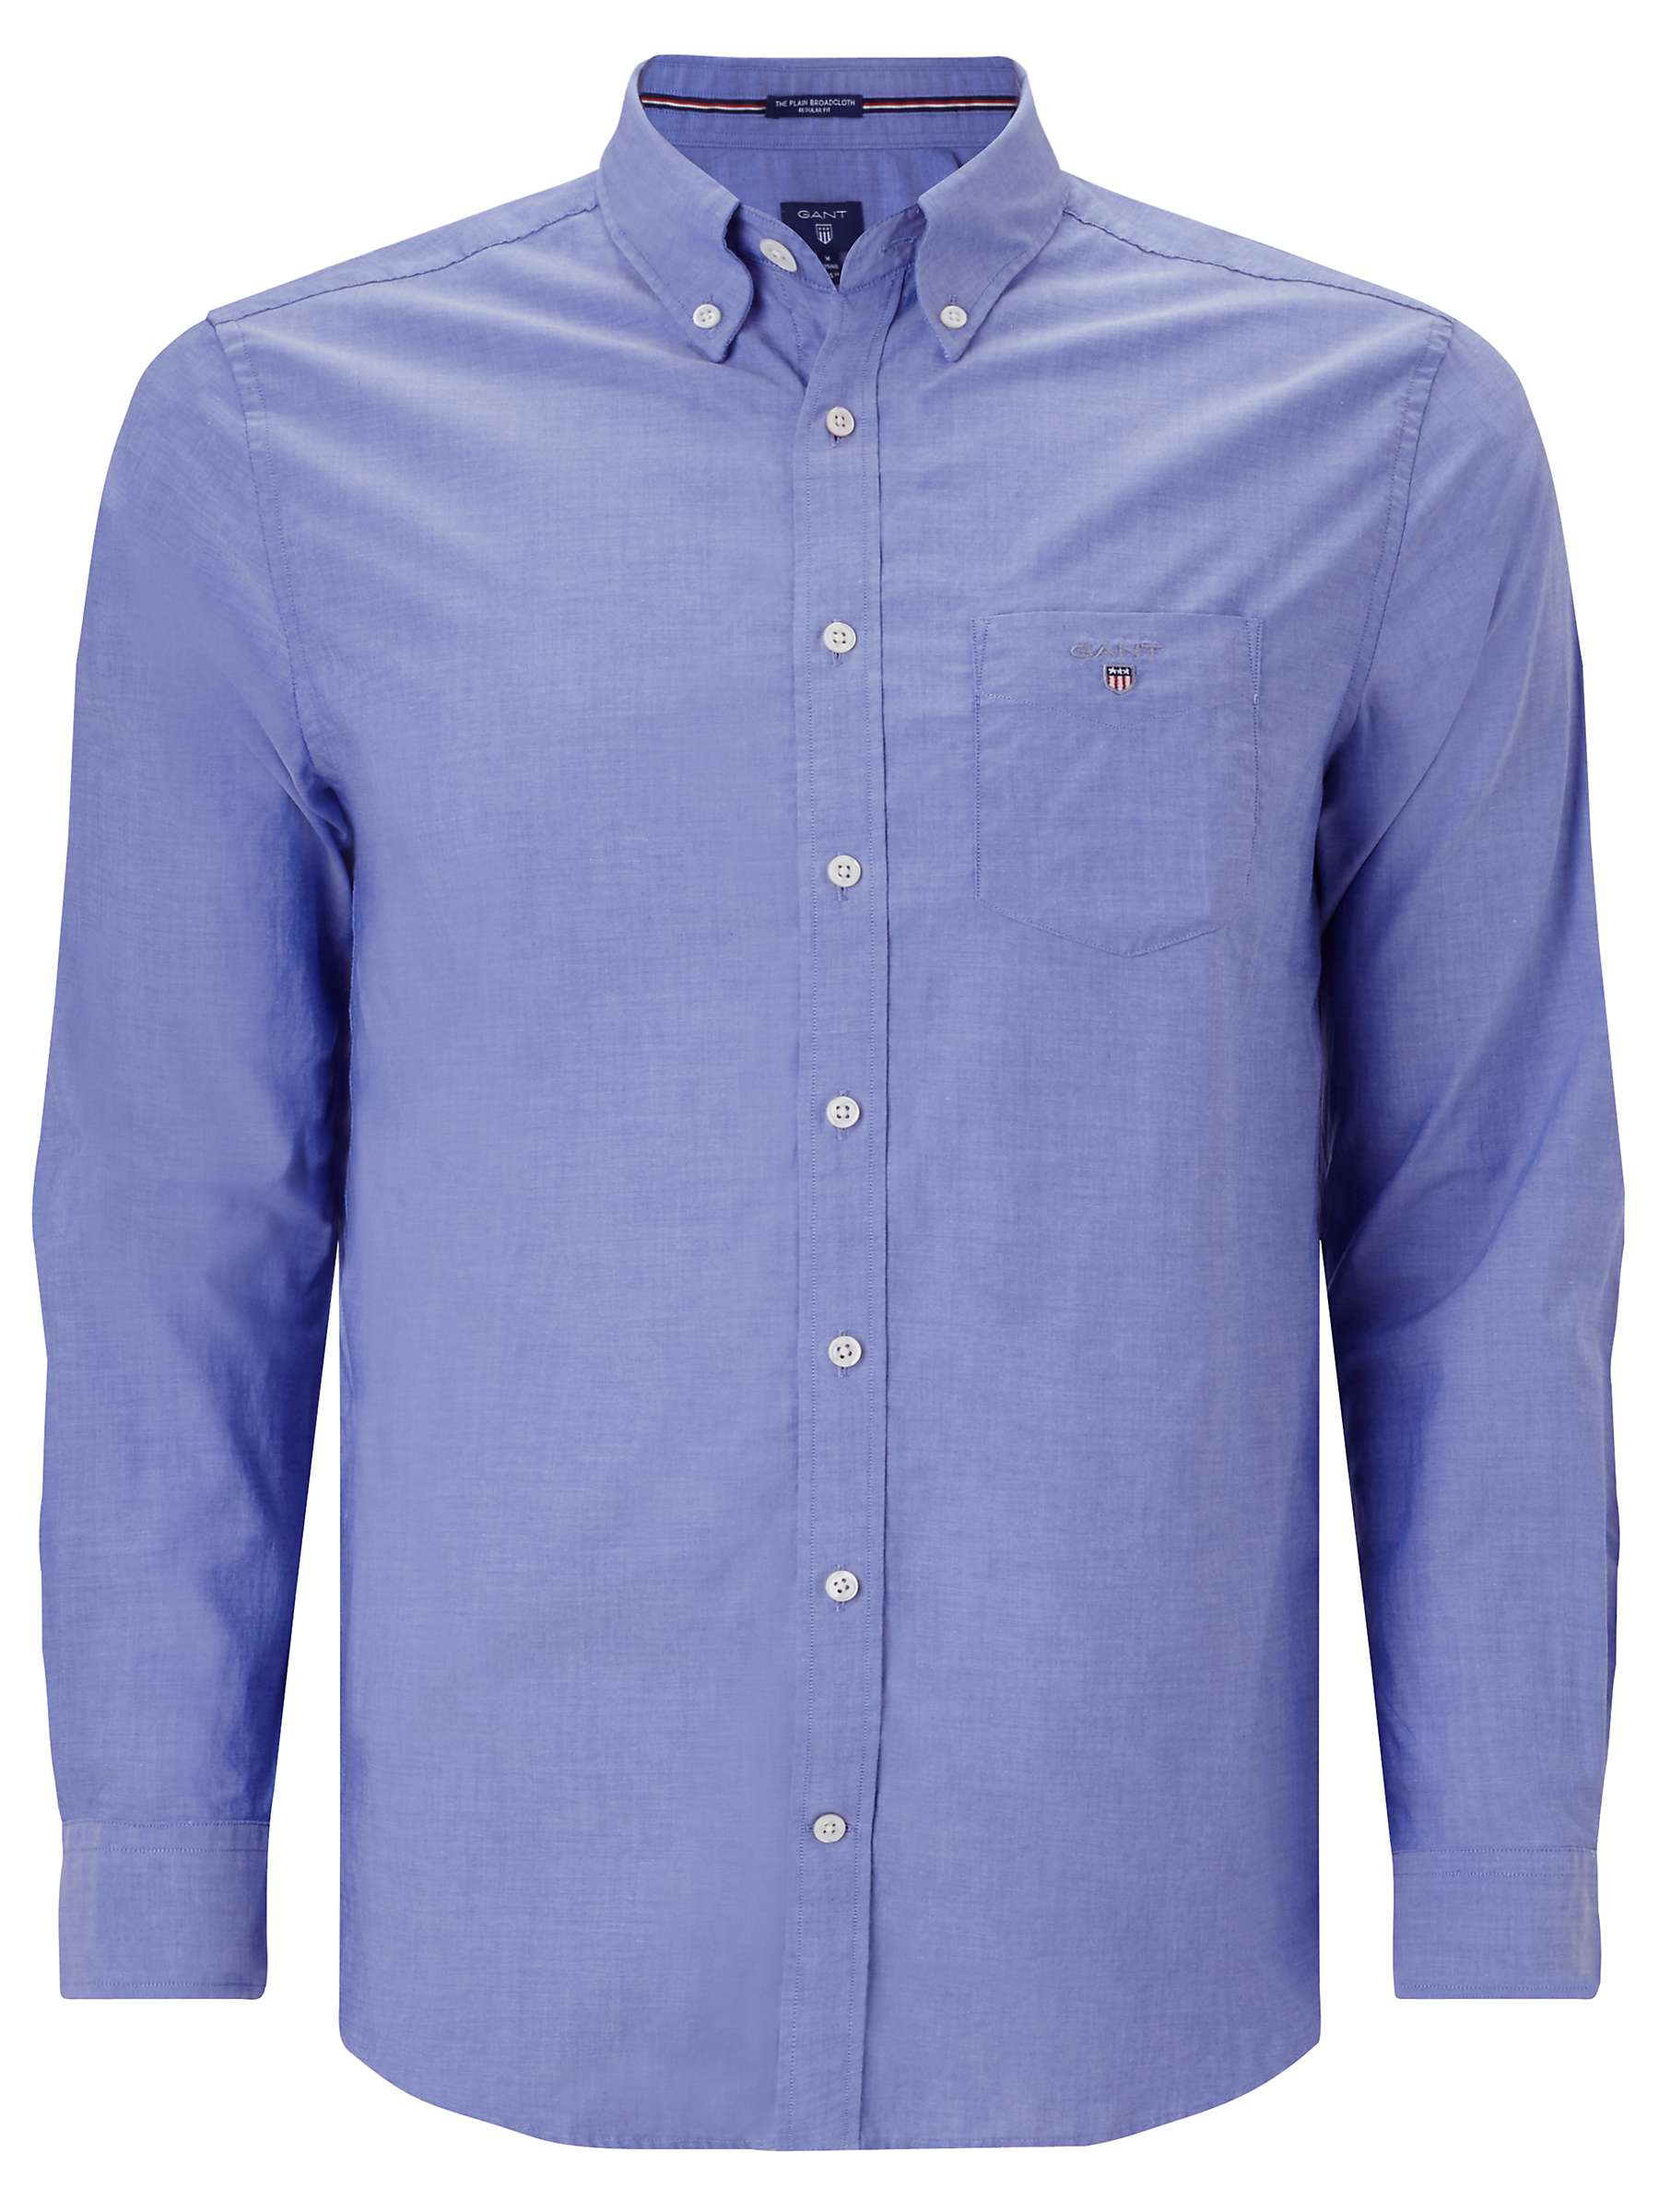 GANT Plain Broadcloth Regular Fit Shirt, Yale Blue at John Lewis & Partners